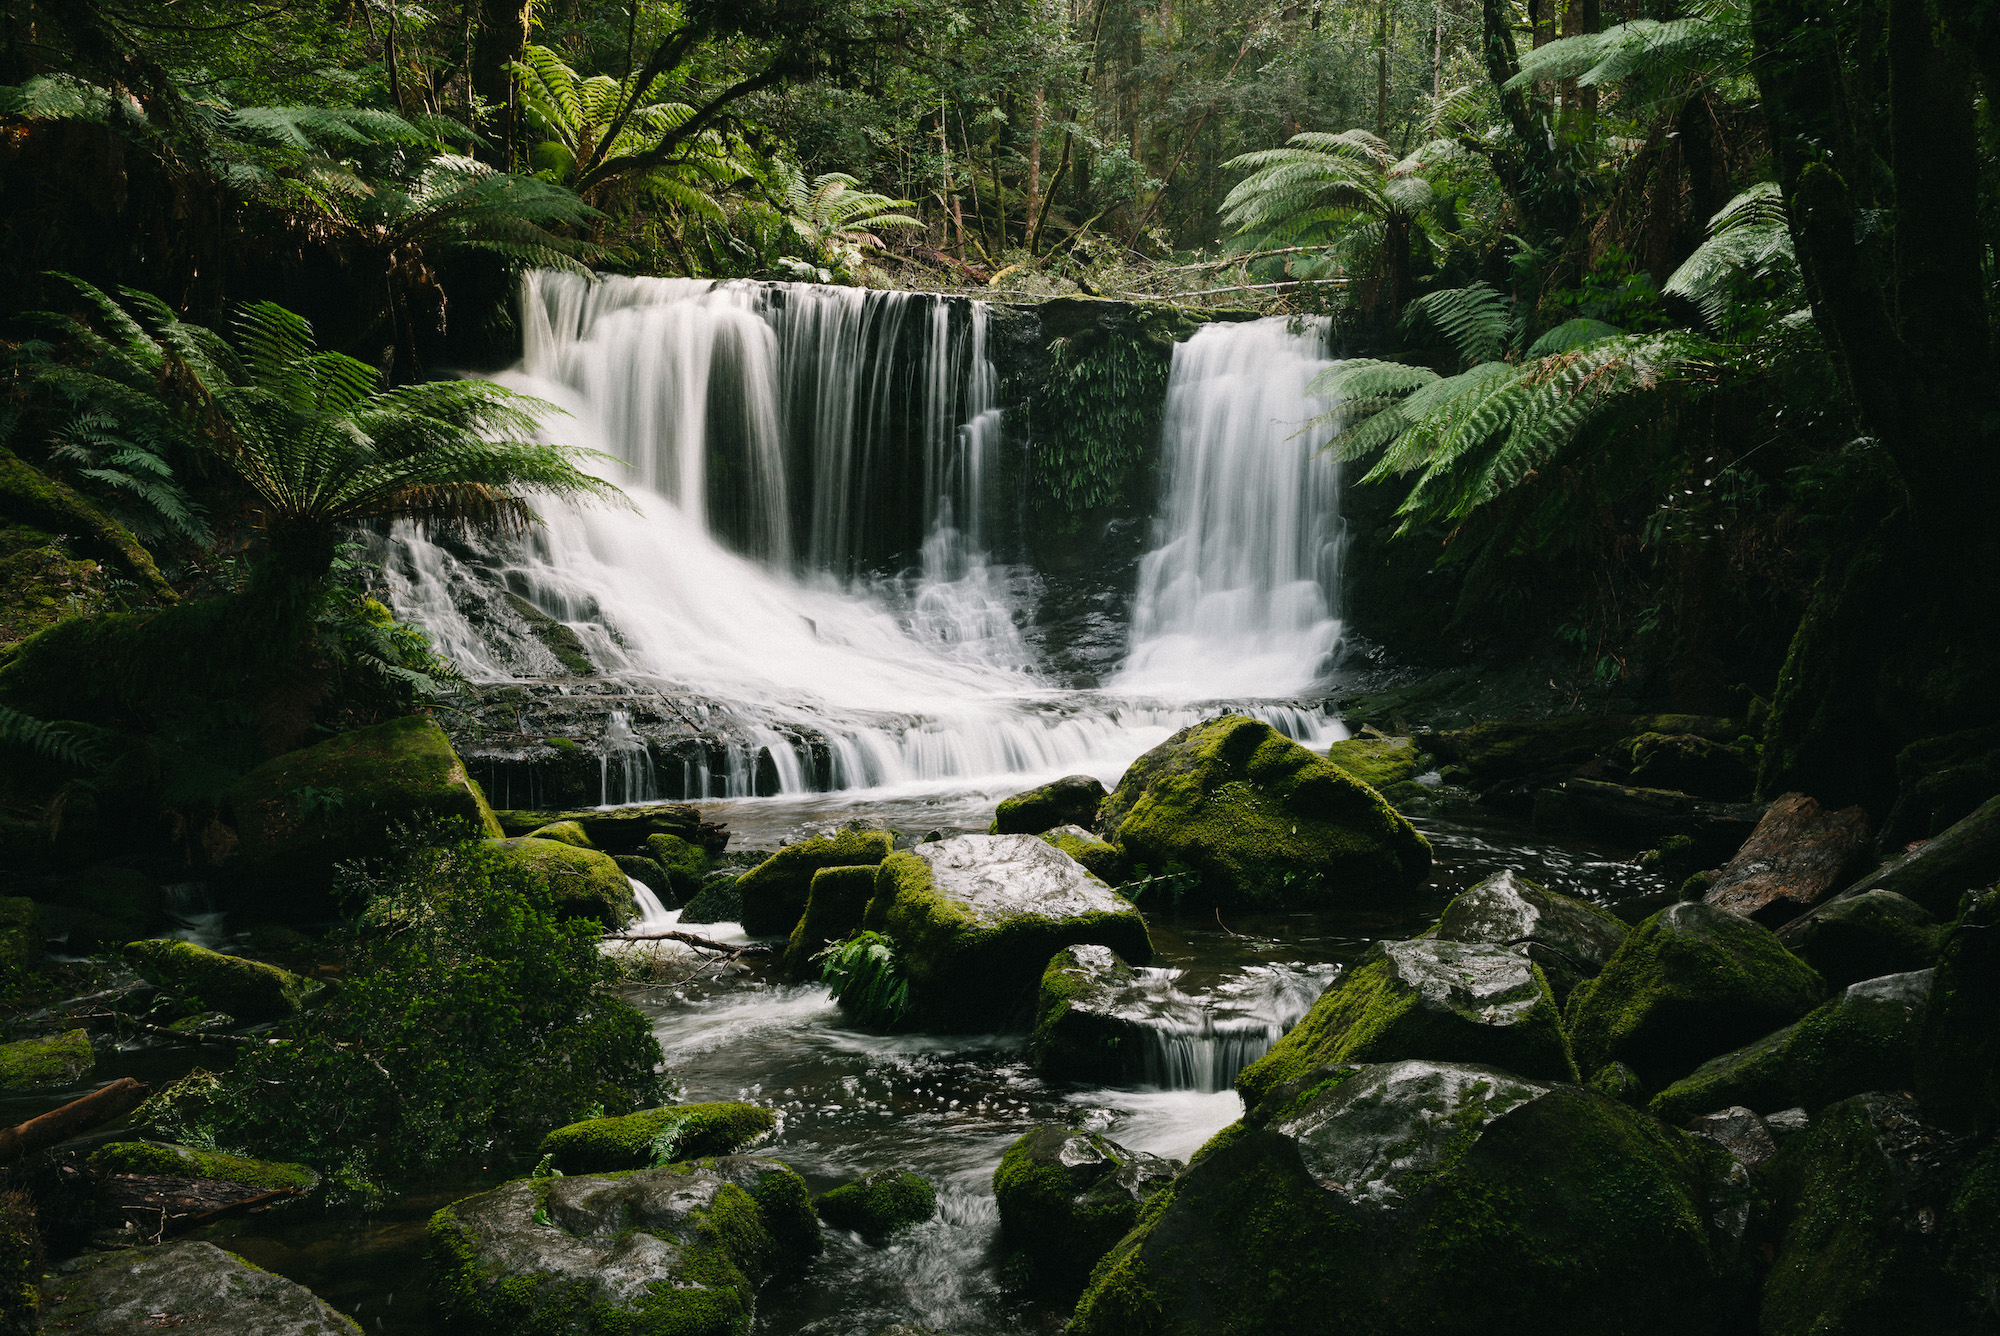  Horseshoe Falls, Tasmania shot on Leica M Typ 240 with Leica Summarit 35mm lens. 